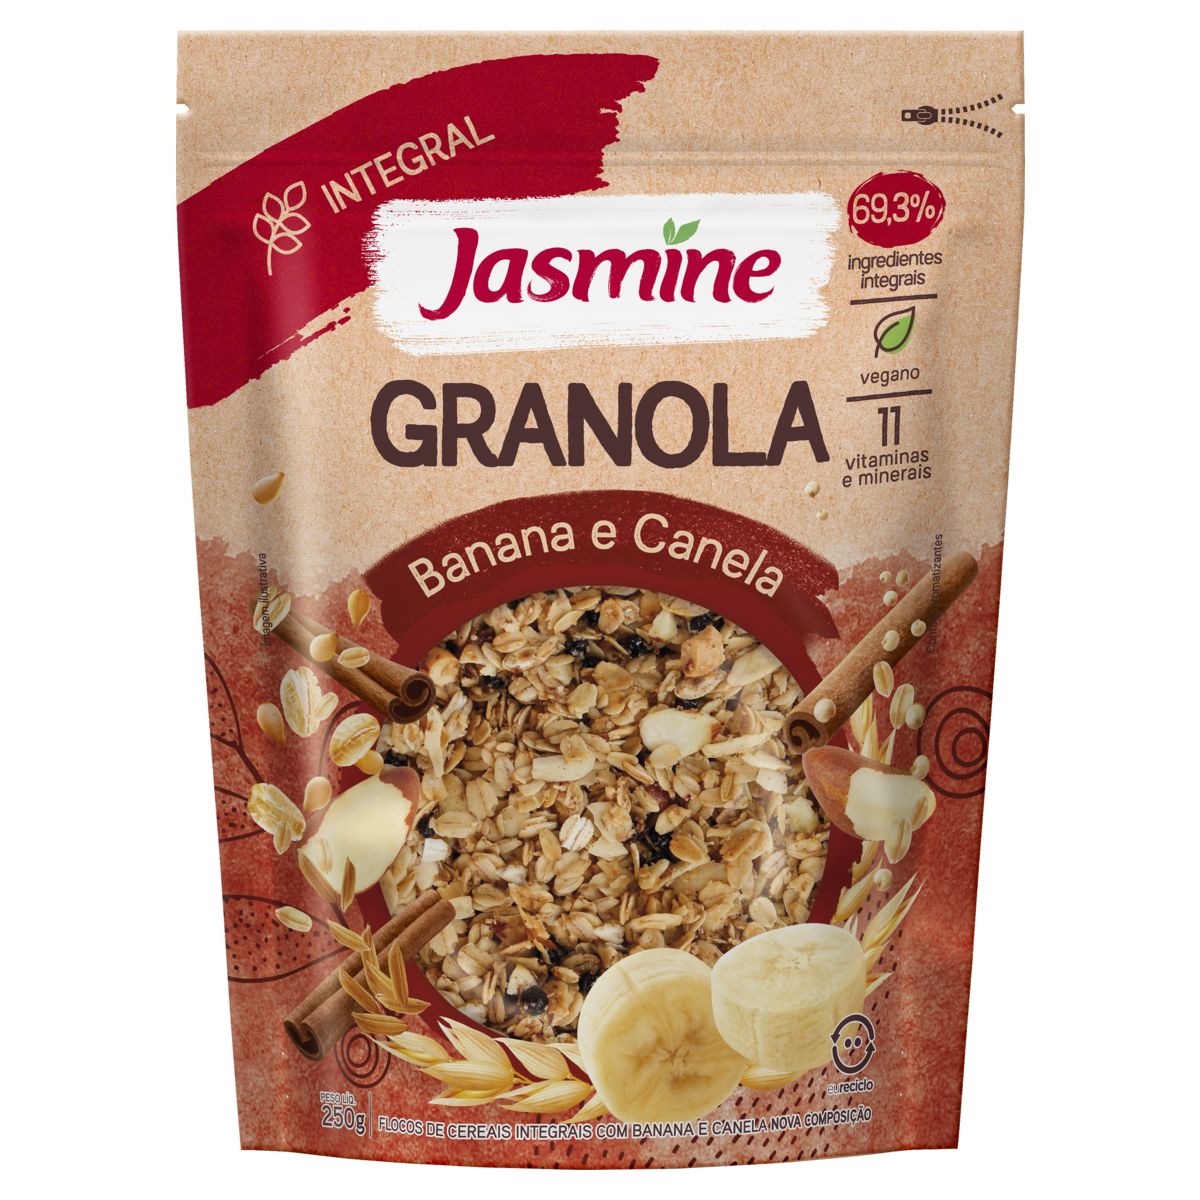 Granola Jasmine 69,3% Integral Banana e Canela Pouch 250g